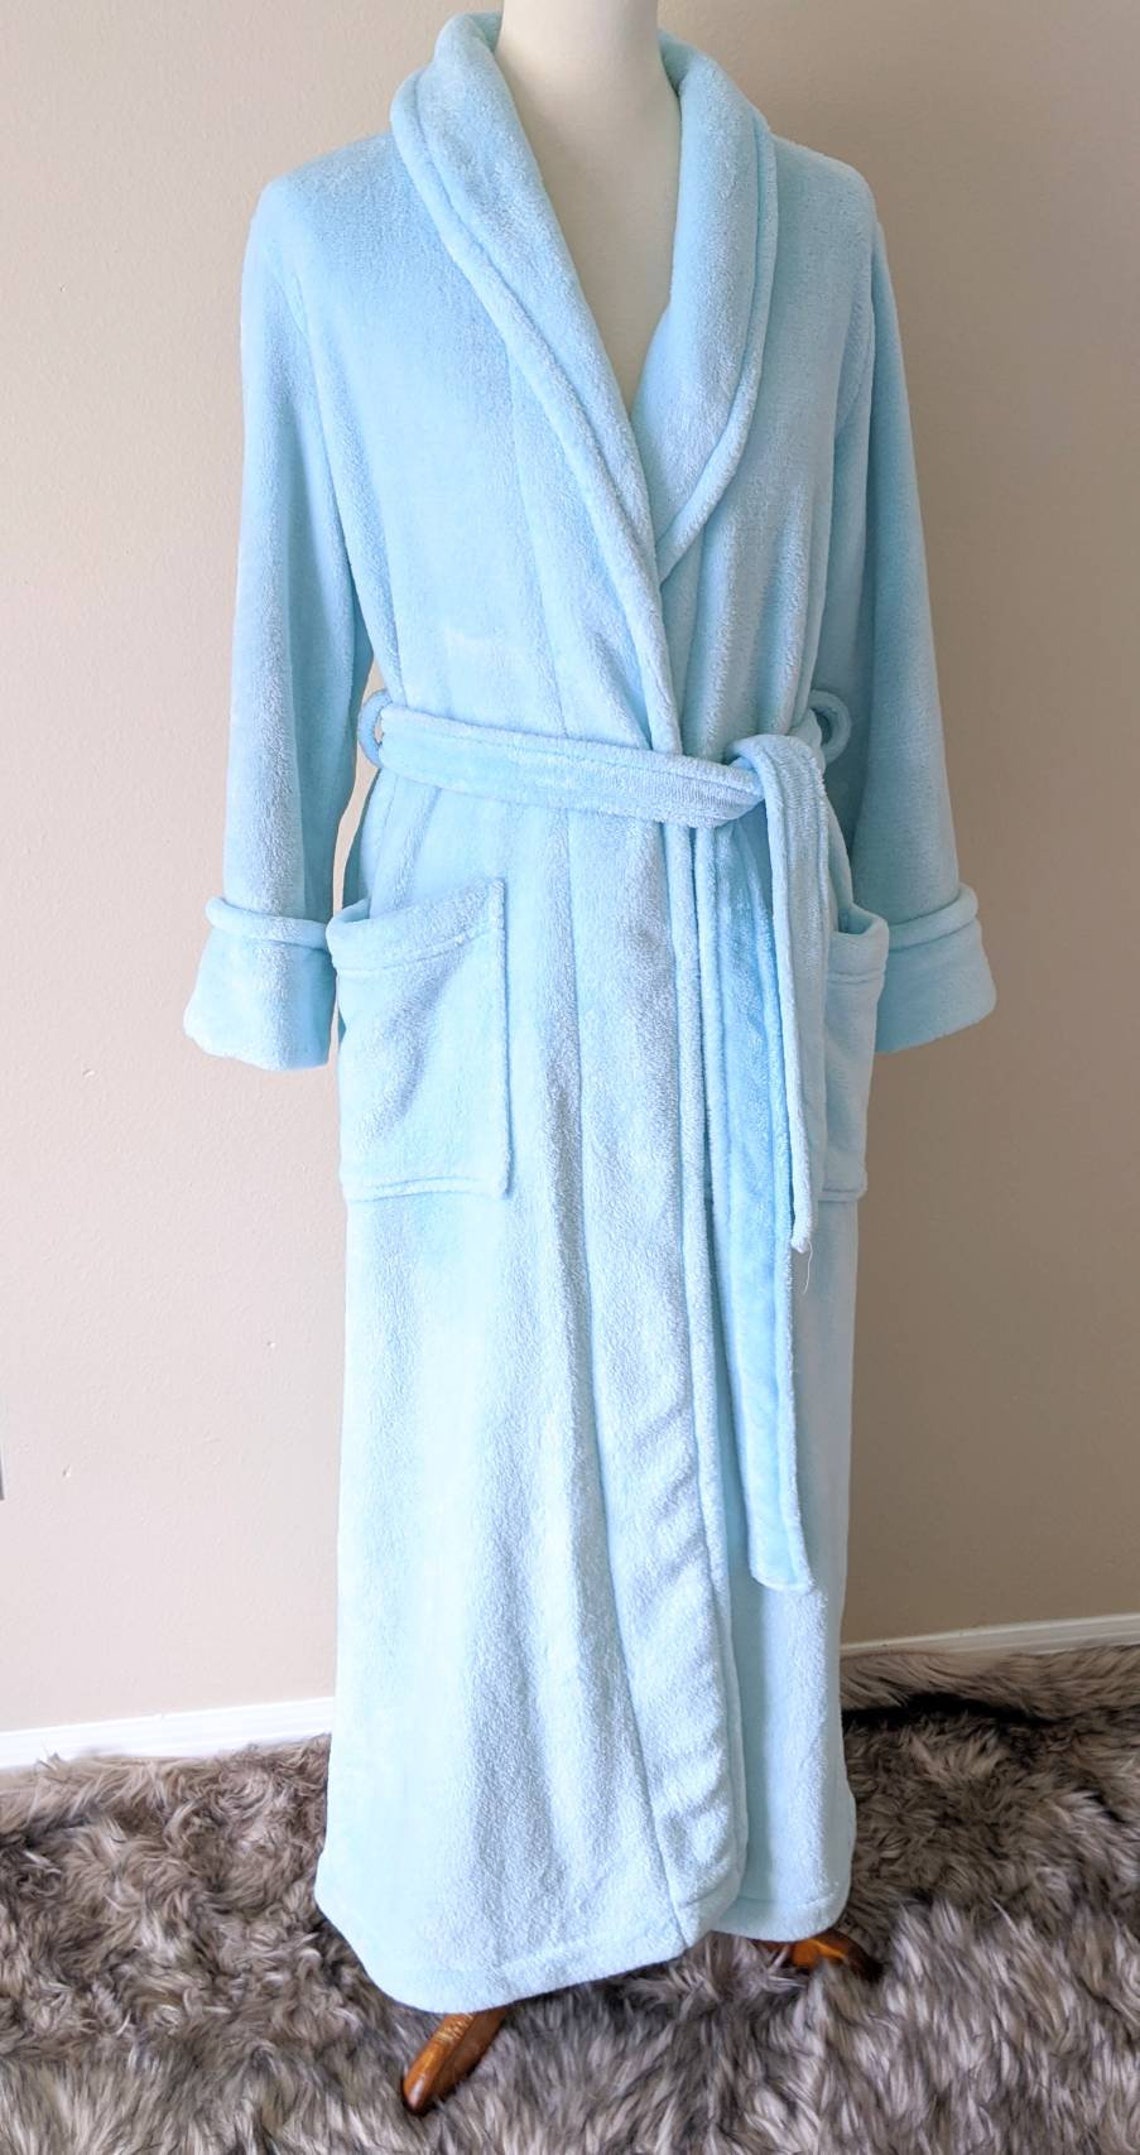 Robe Blue Long Lounge Wear Women Bathrobe by CHARTER CLUB | Etsy